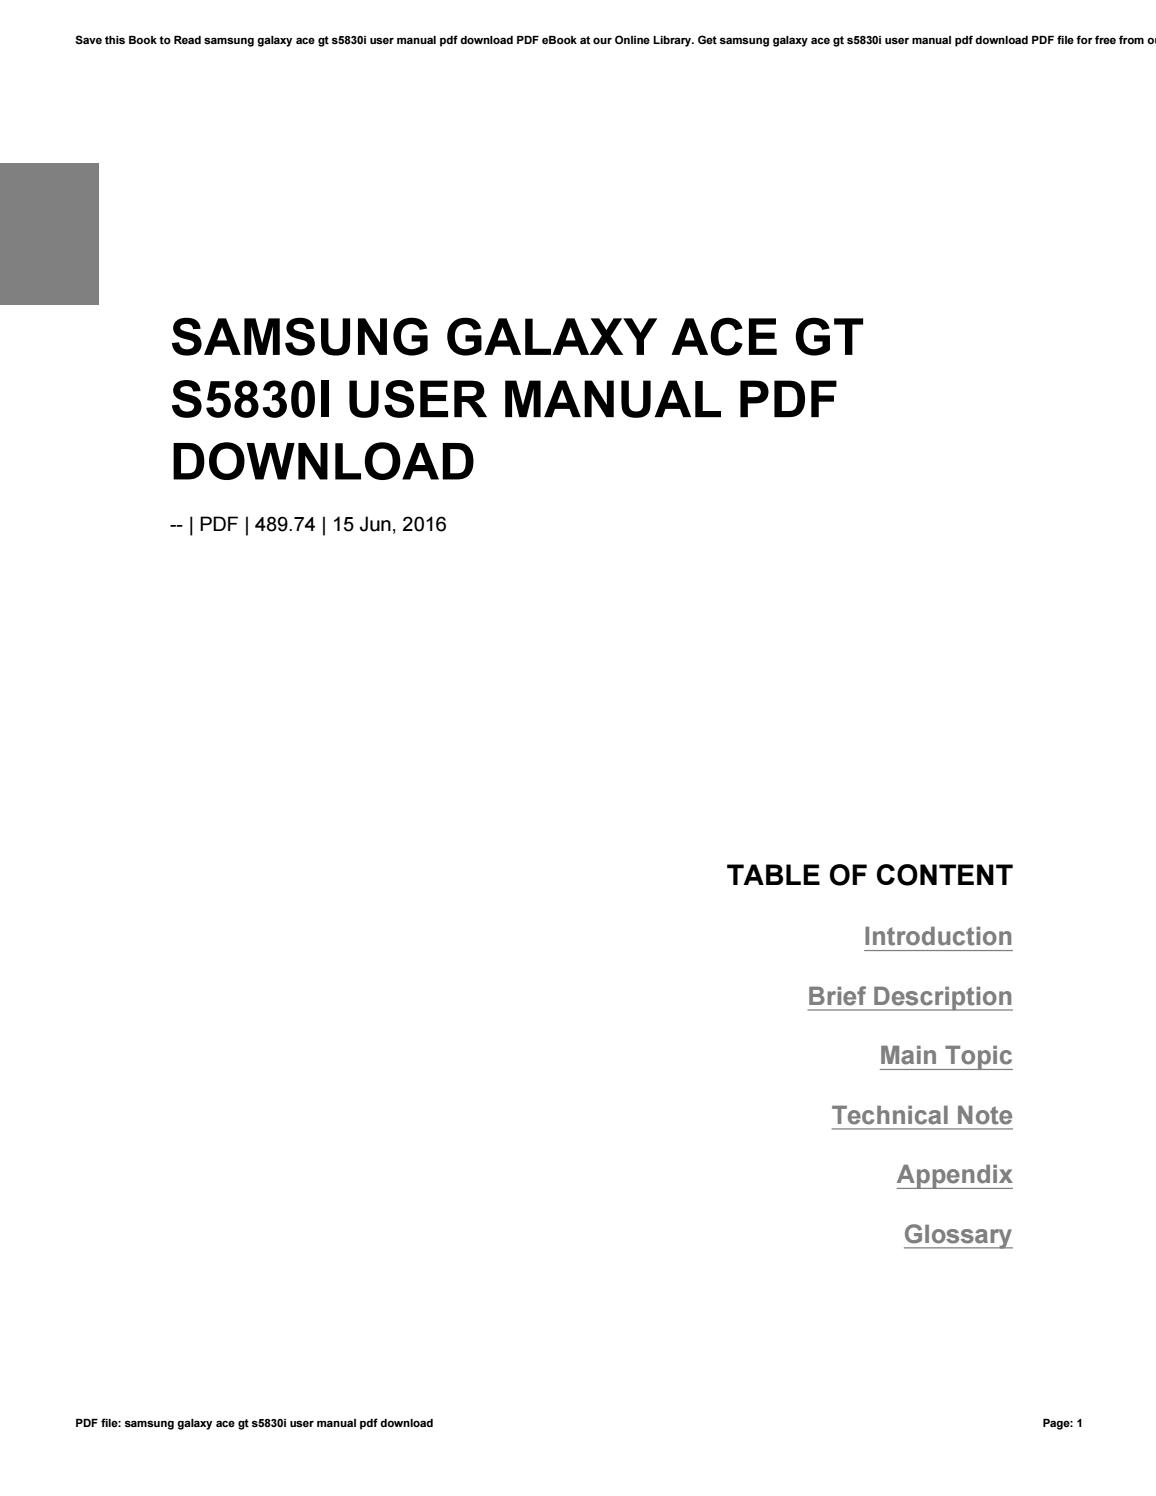 Samsung user manuals pdf